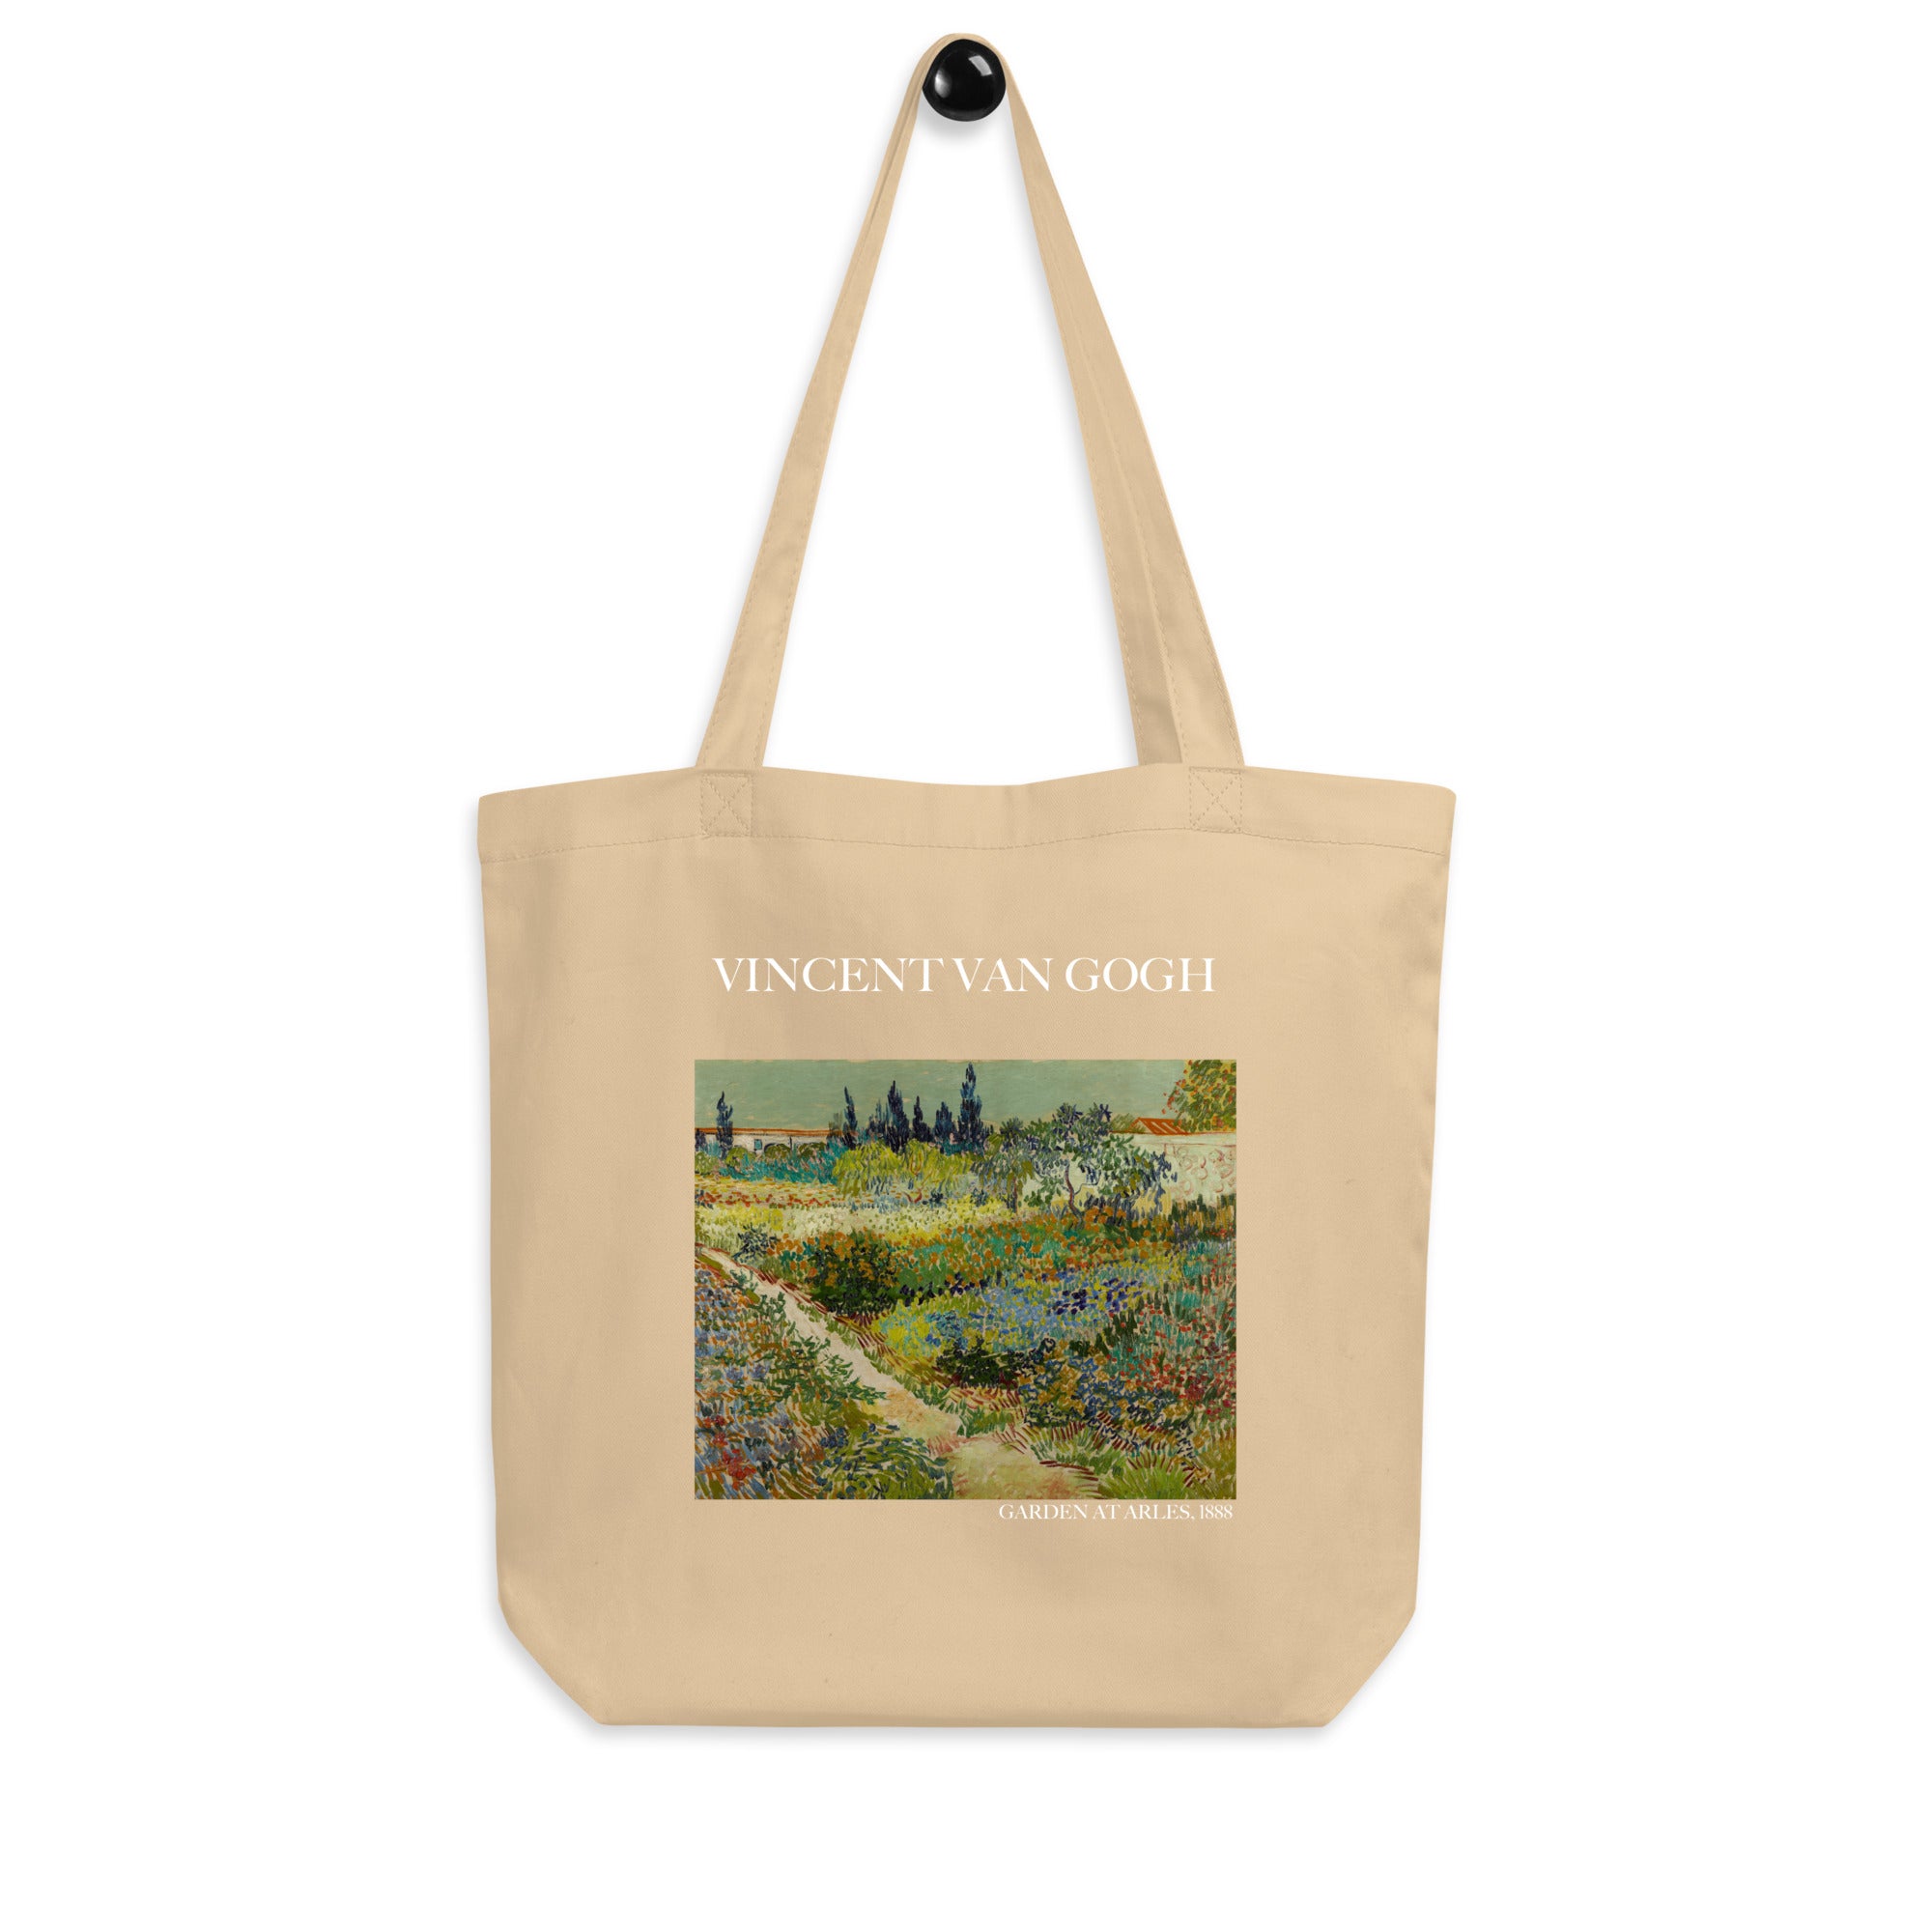 Vincent van Gogh 'Garden at Arles' Famous Painting Totebag | Eco Friendly Art Tote Bag